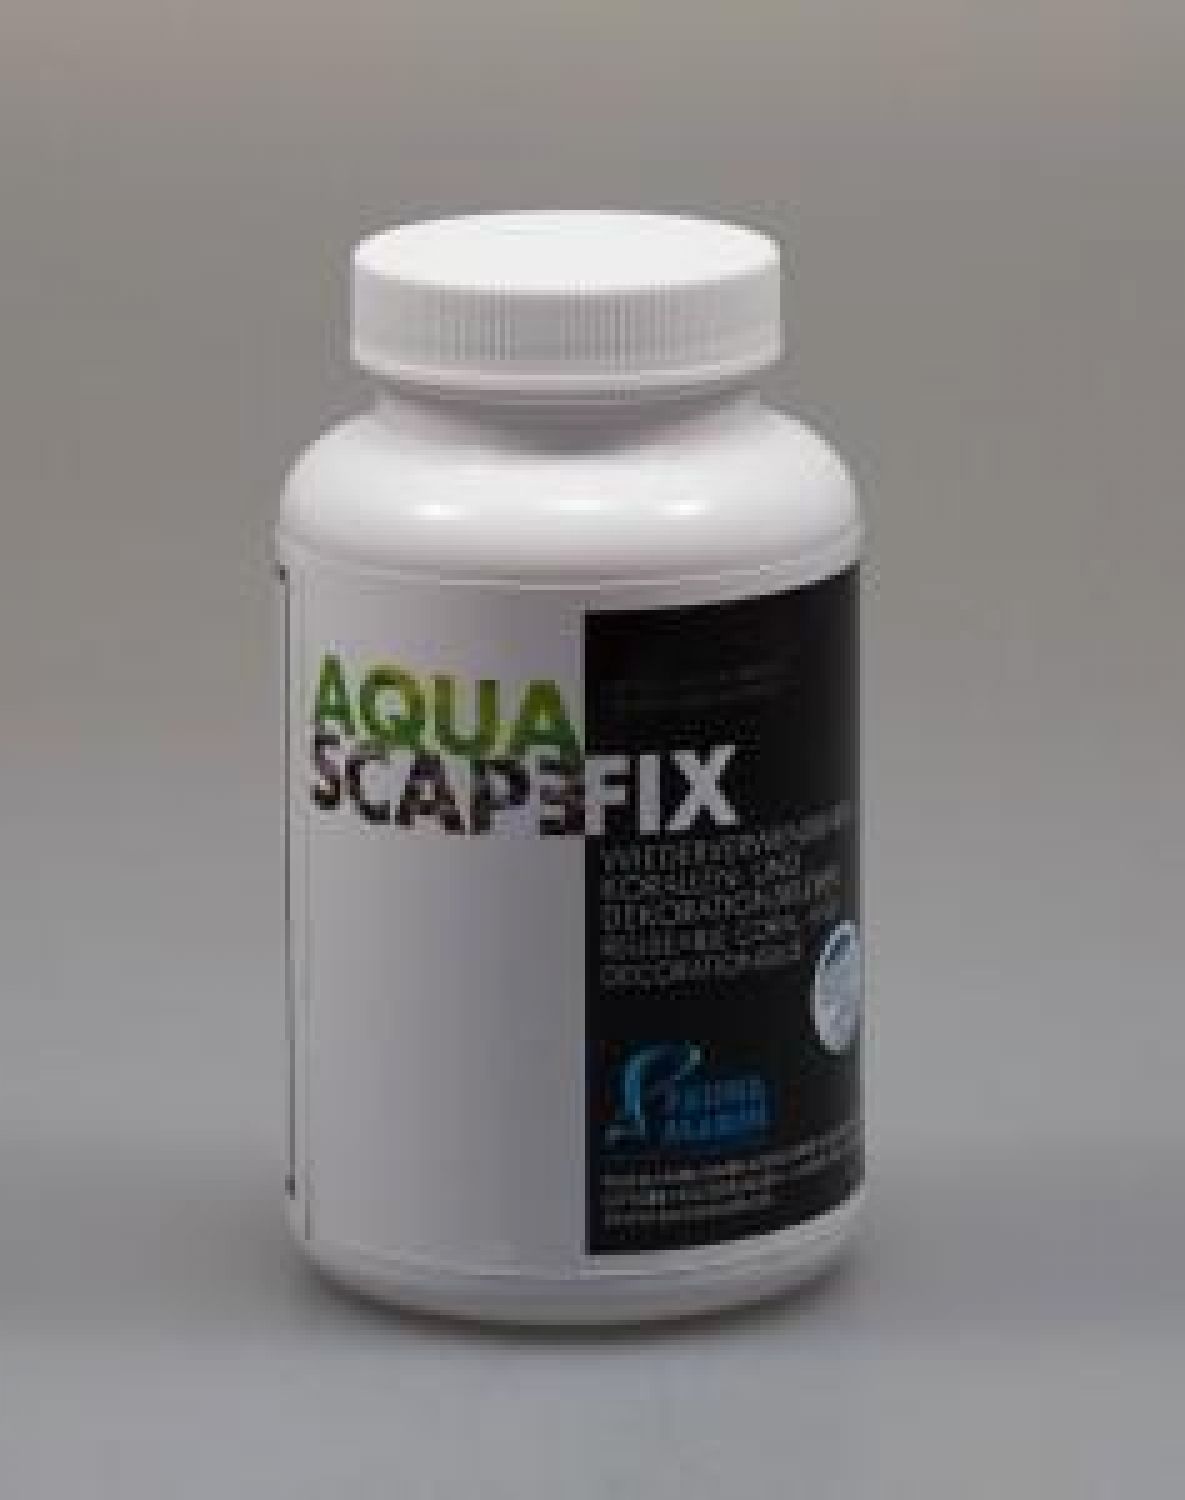 Fauna Marin - Aqua Scape Fix 250 ml